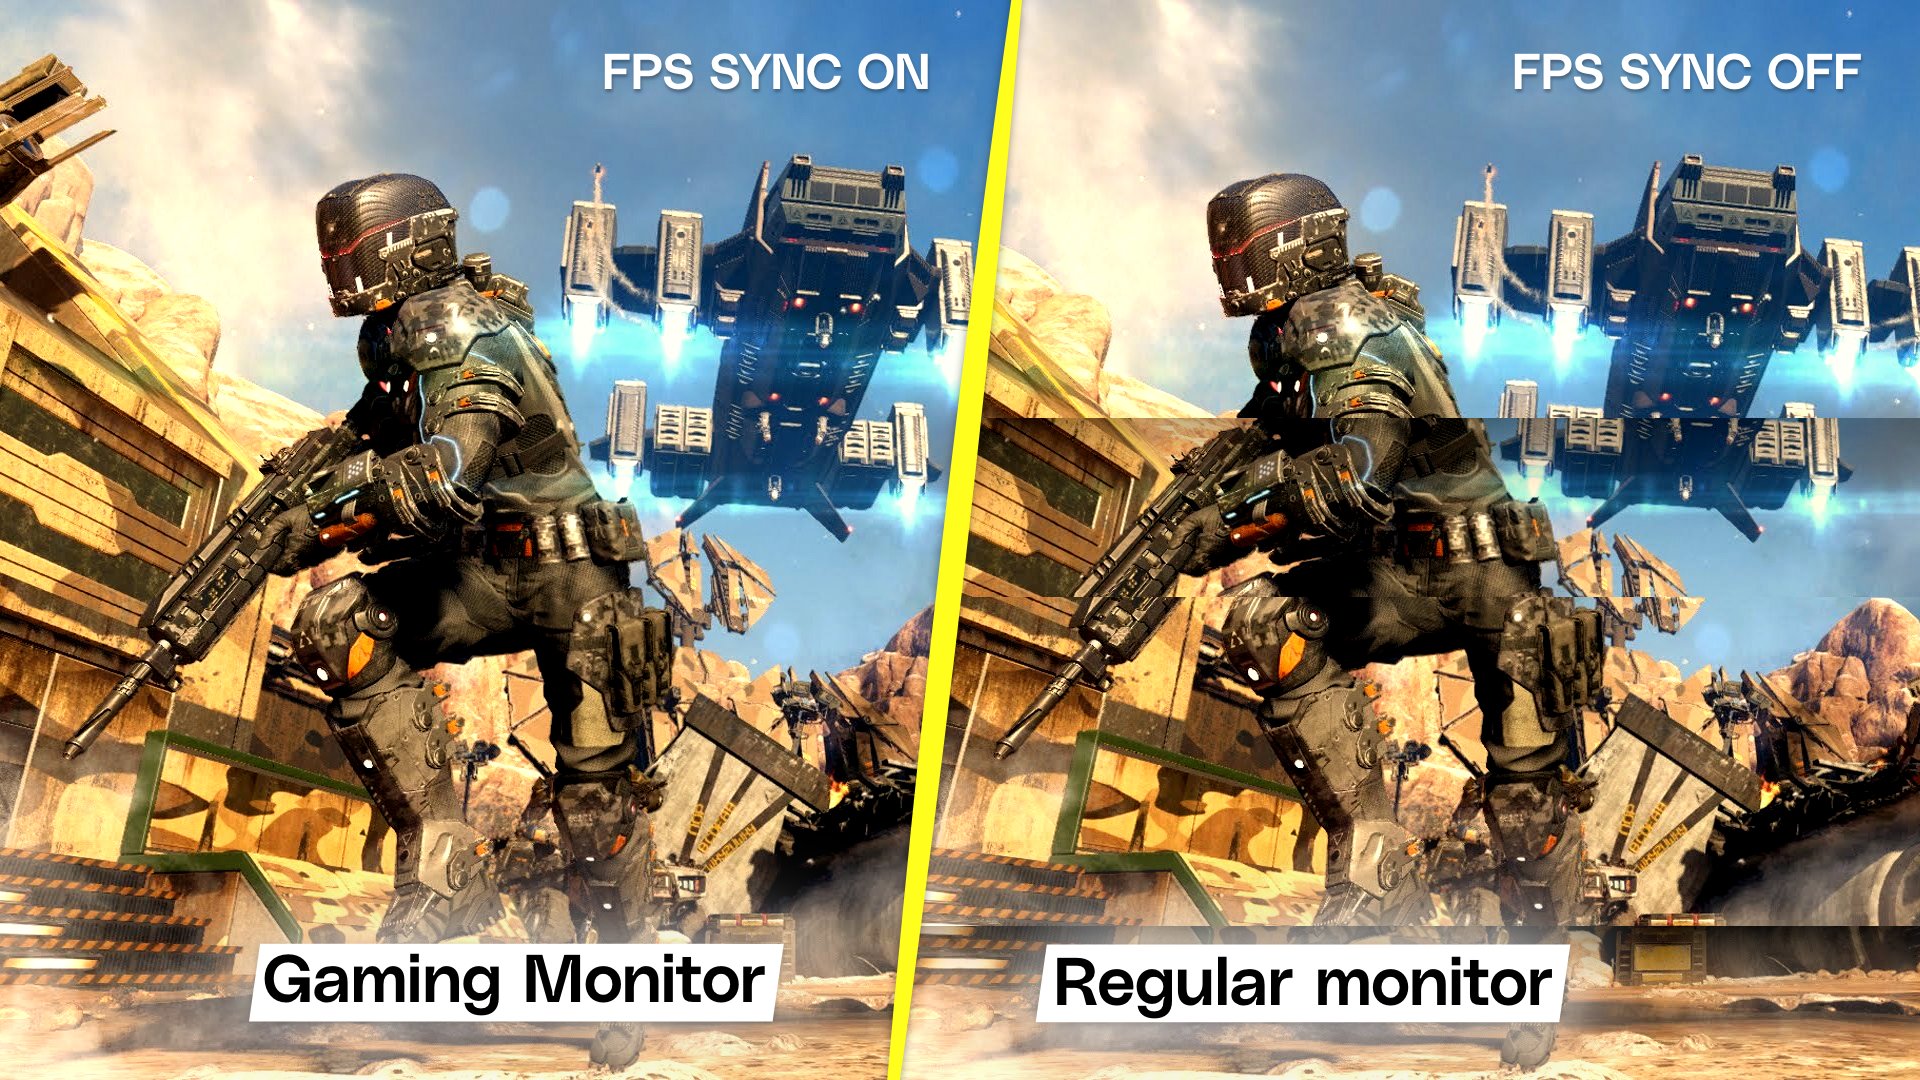 Gaming Monitor vs Regular Monitor fps sync